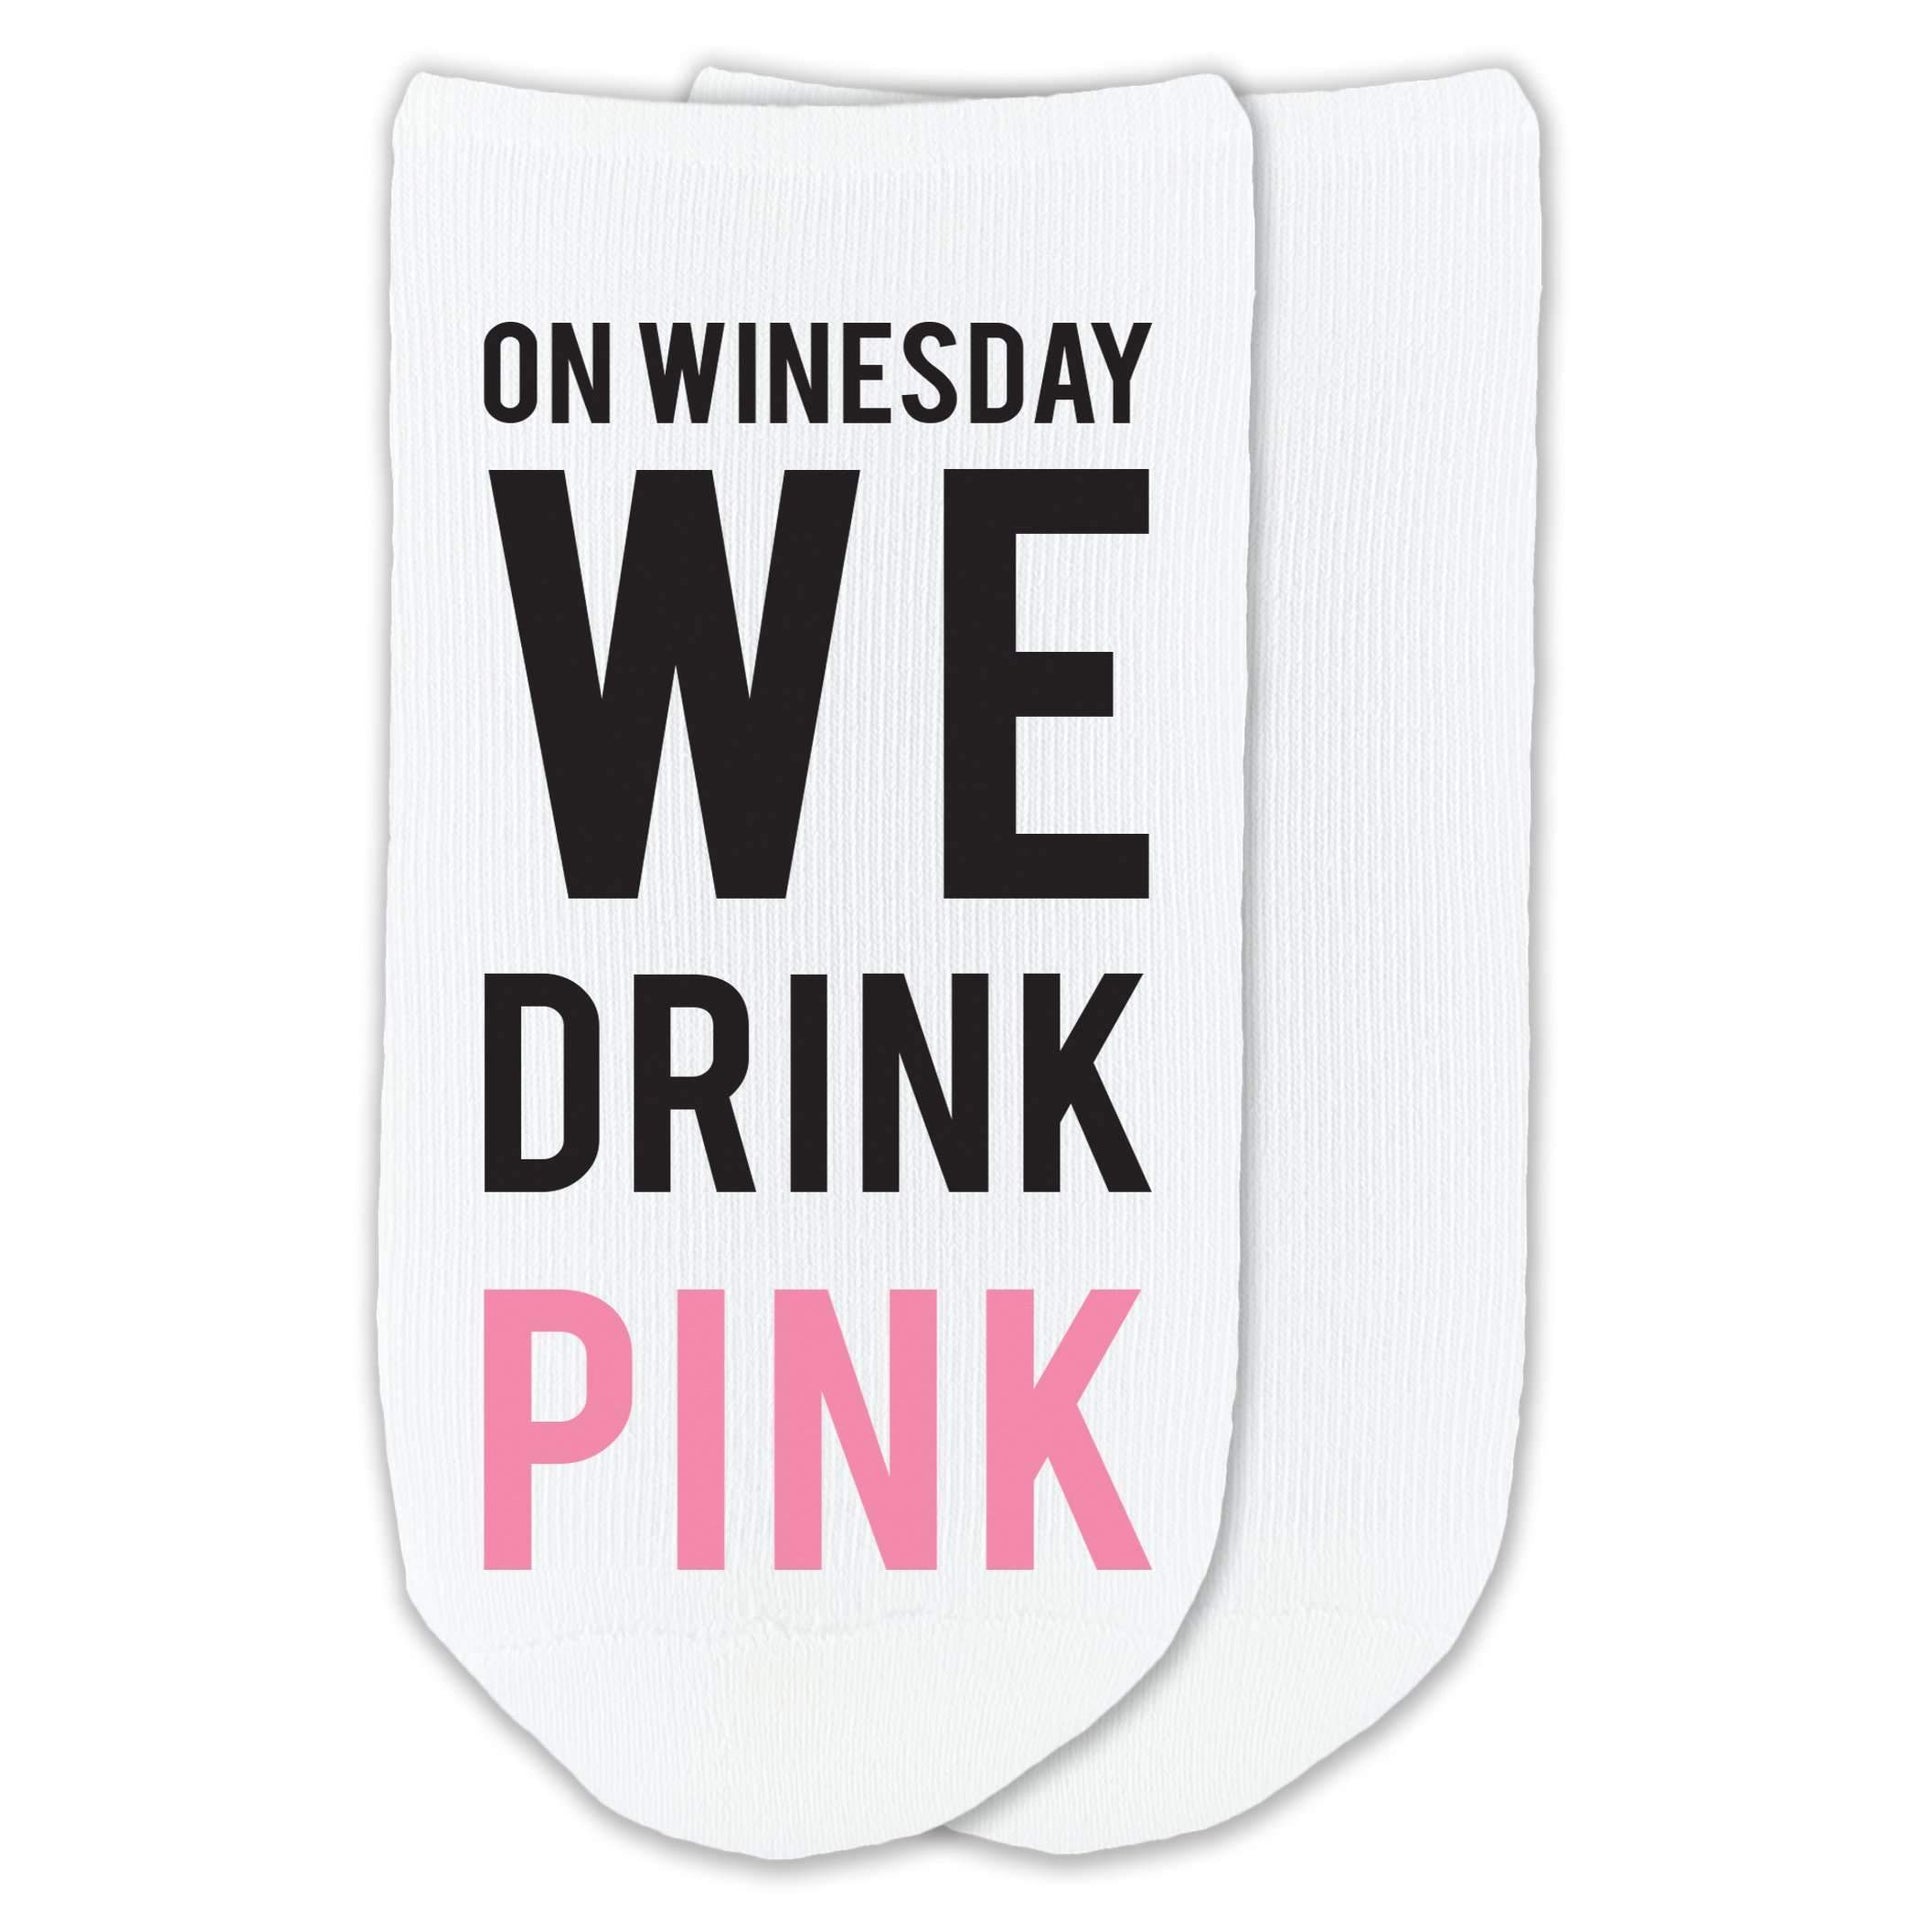 On winesday we drink pink custom printed on no show socks.